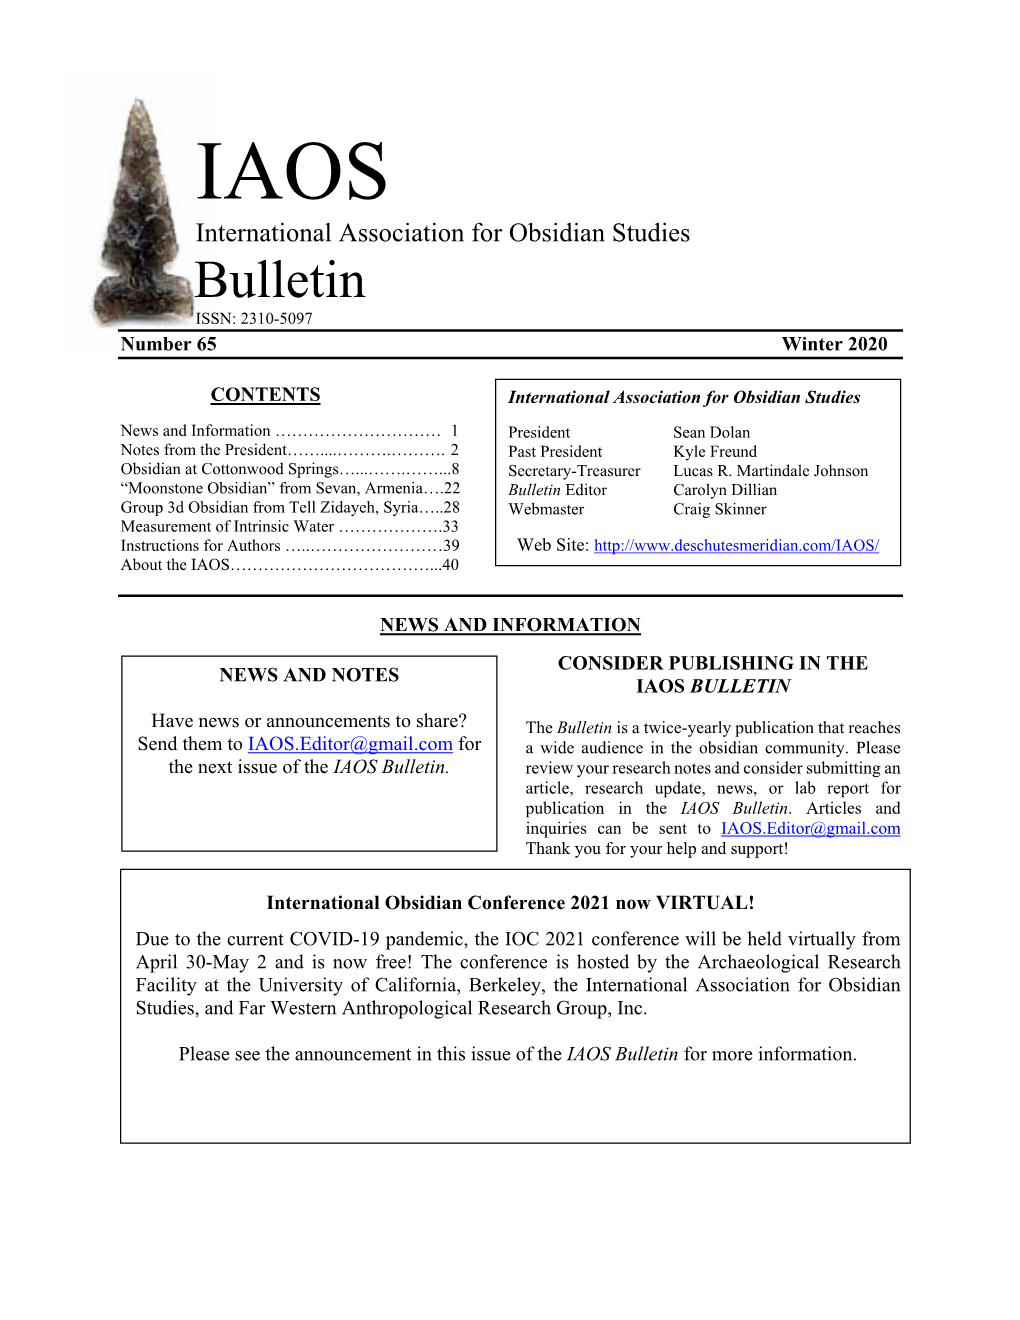 IAOS Bulletin No. 65, Winter 2020 Pg